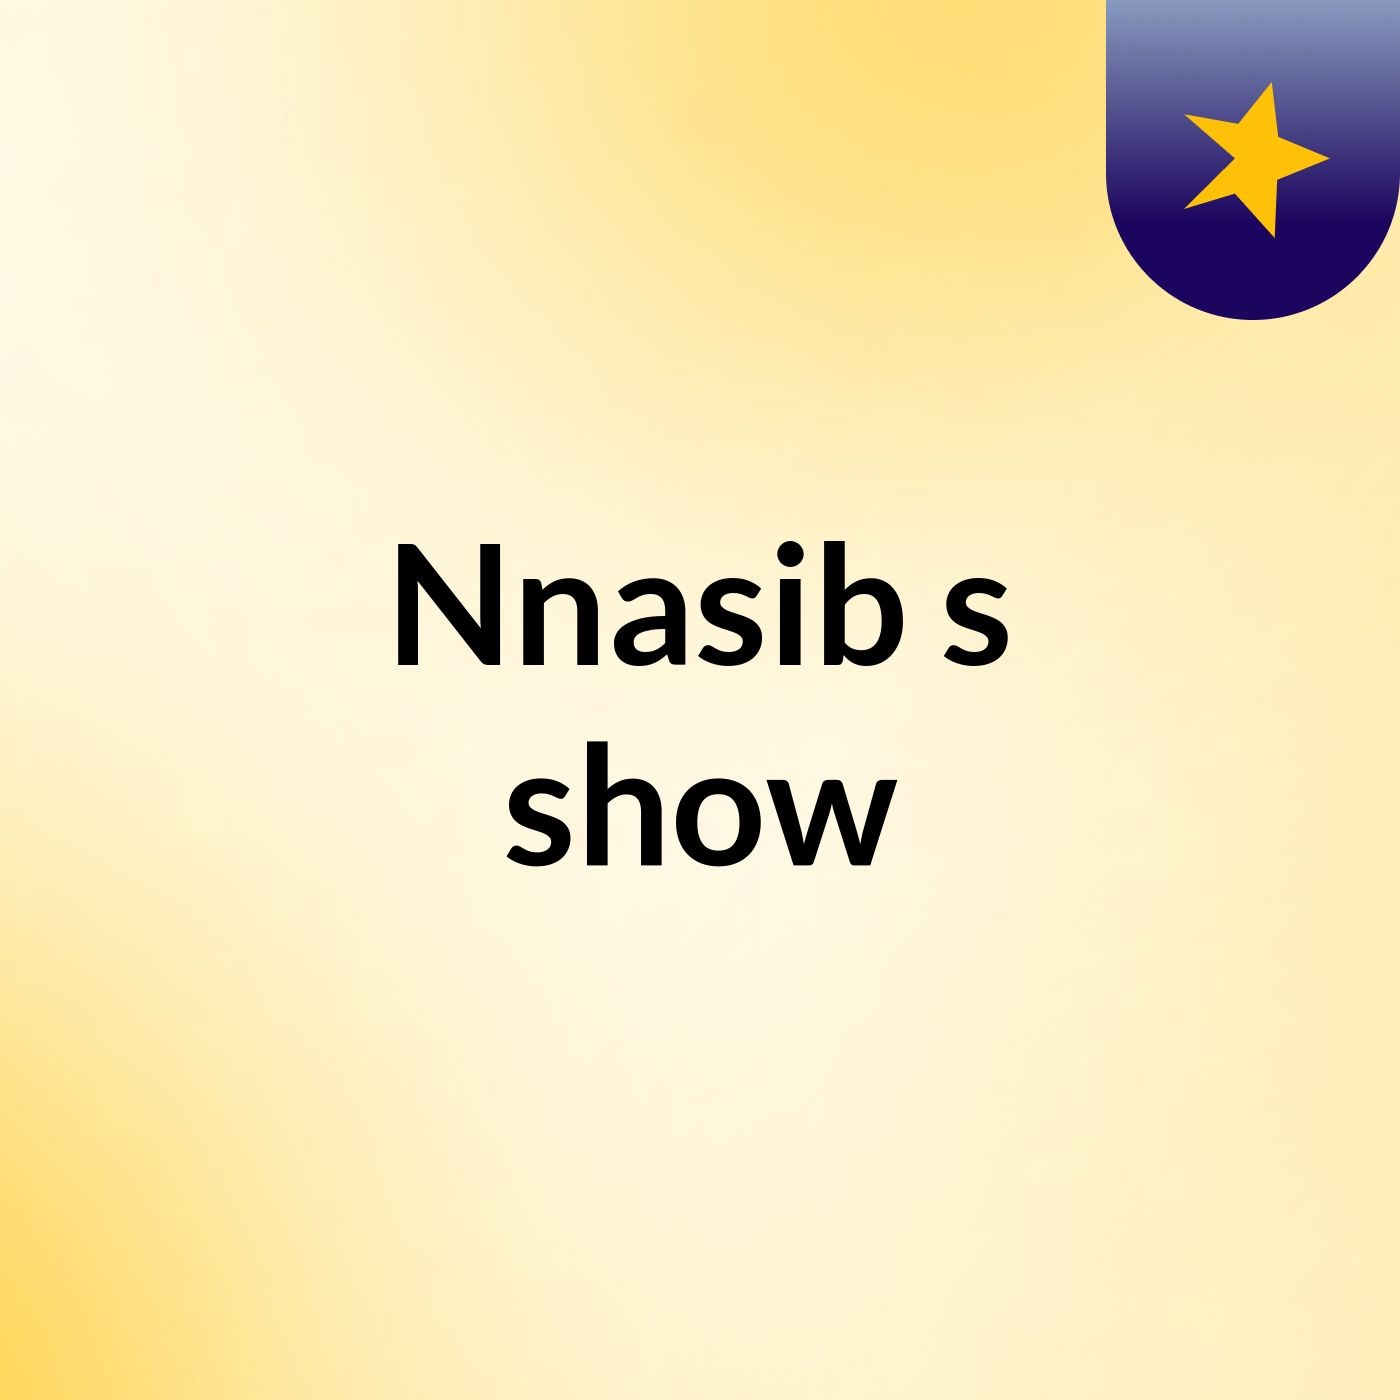 Nnasib's show